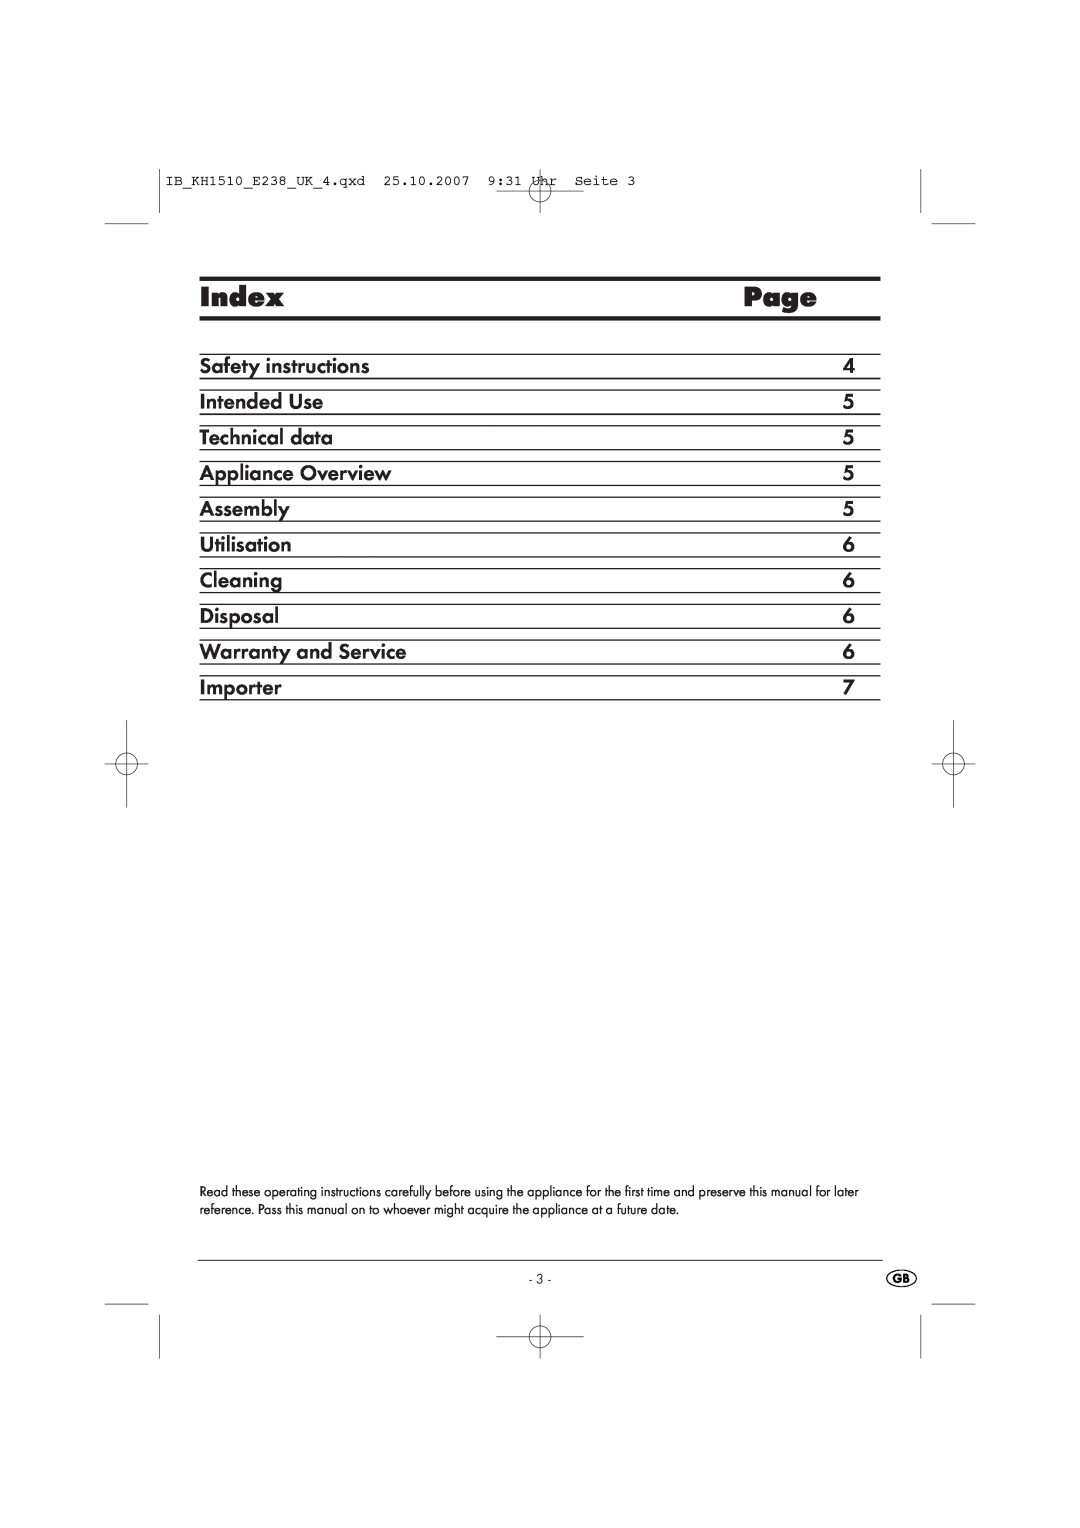 Kompernass KH 1510 manual Index, Page 